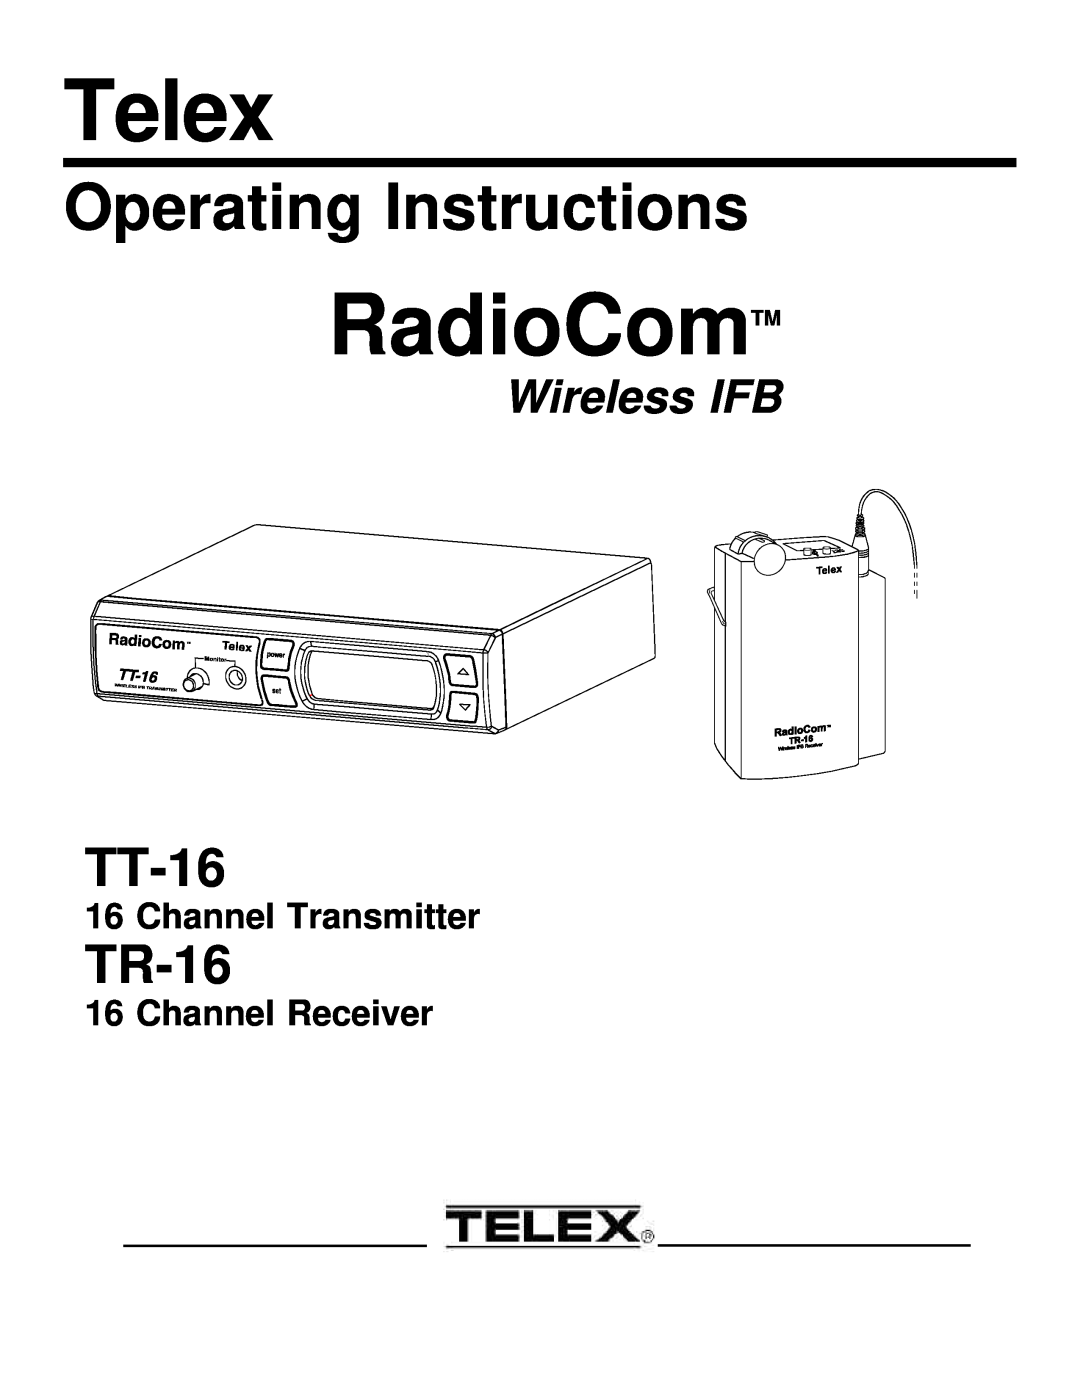 Telex TR-16 manual Channel Transmitter, Channel Receiver, Telex, RadioComTM, Operating Instructions, TT-16, Wireless IFB 